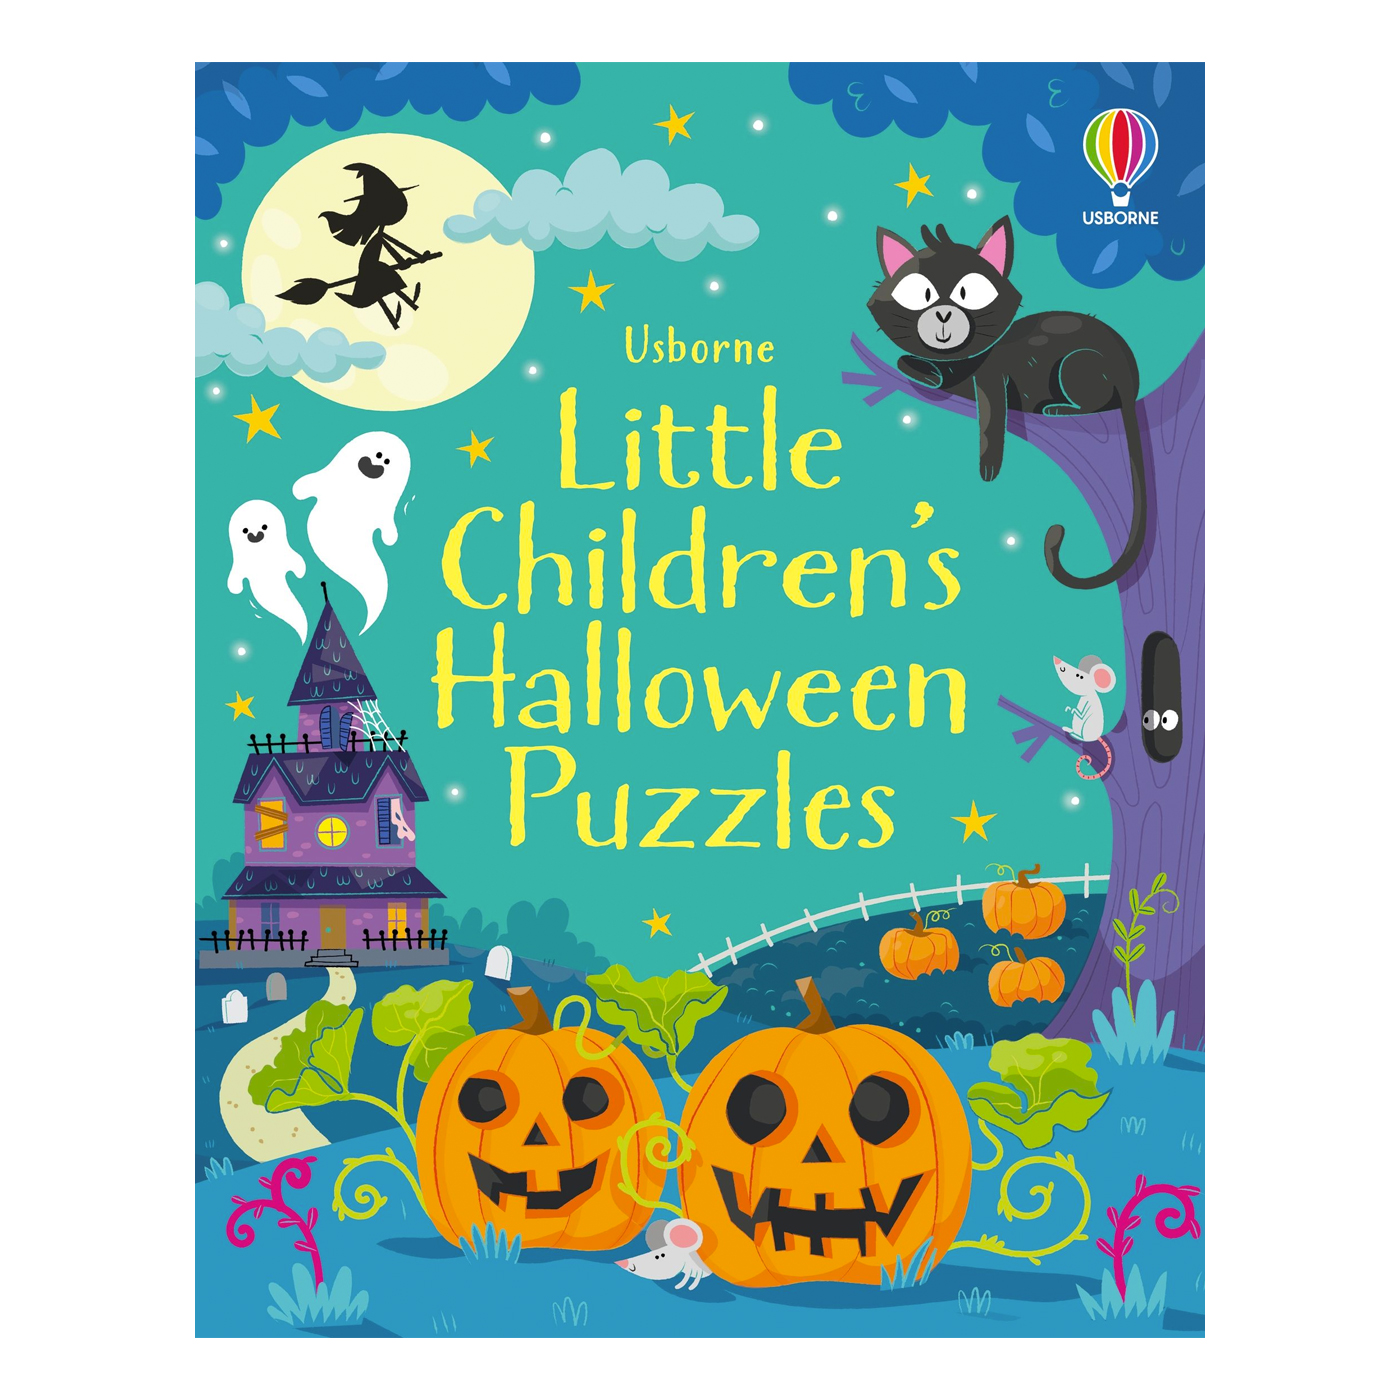  Little Children's Halloween Puzzles